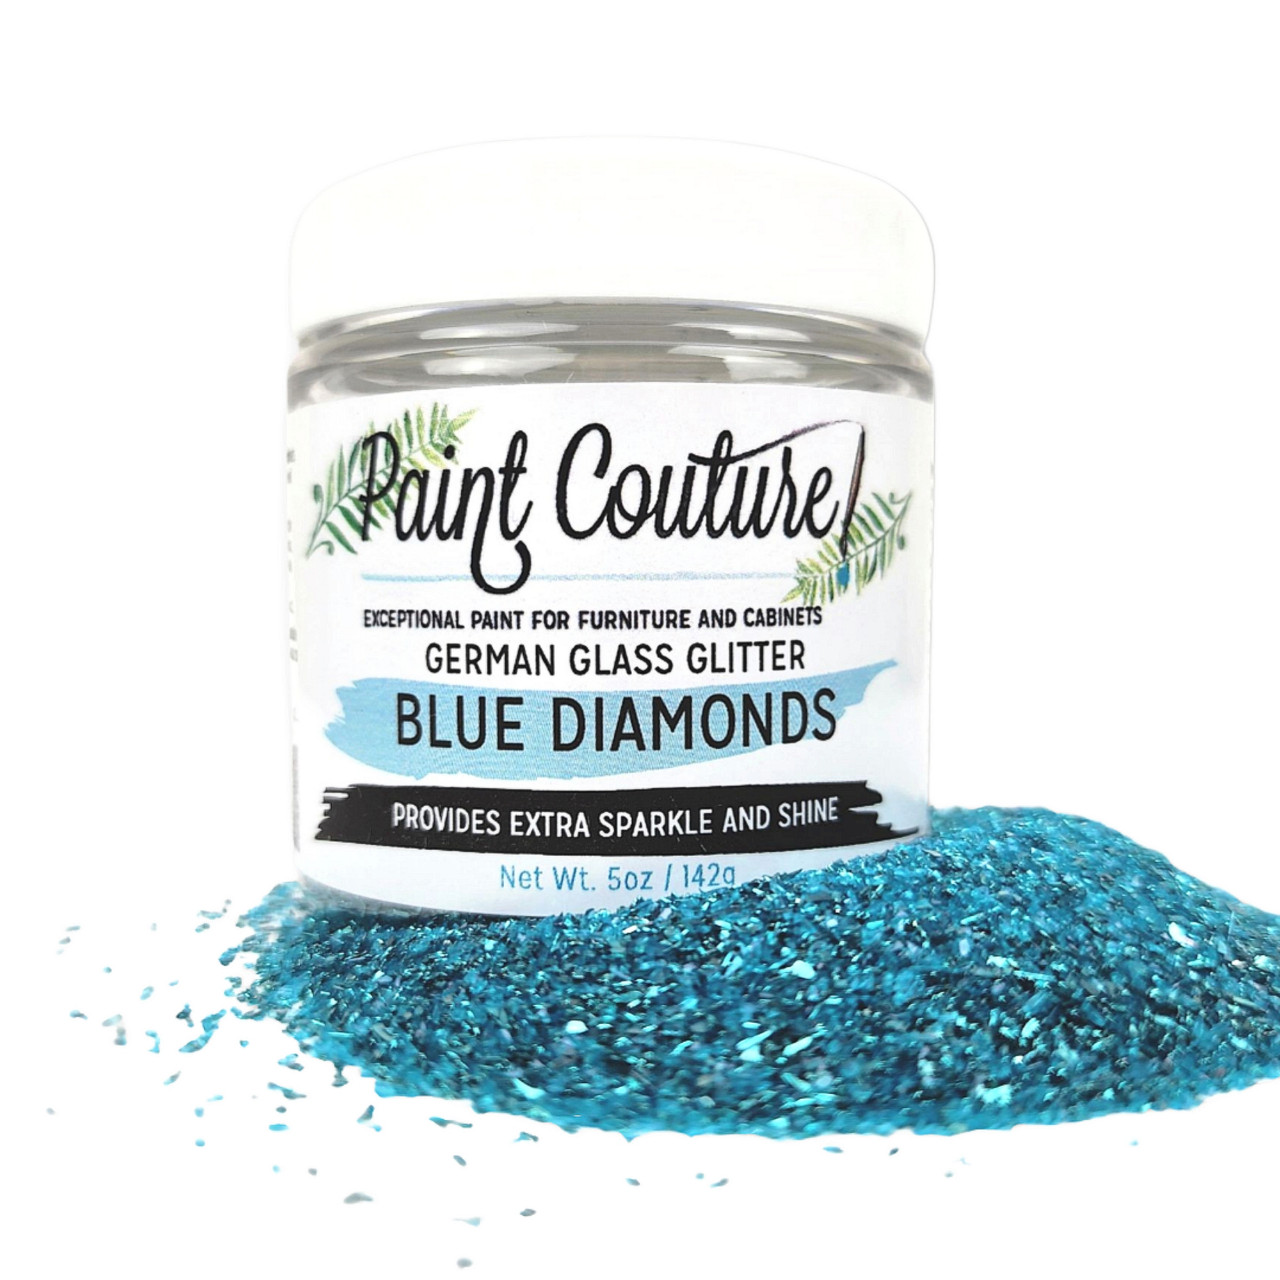 Blue Diamonds German Glass Glitter